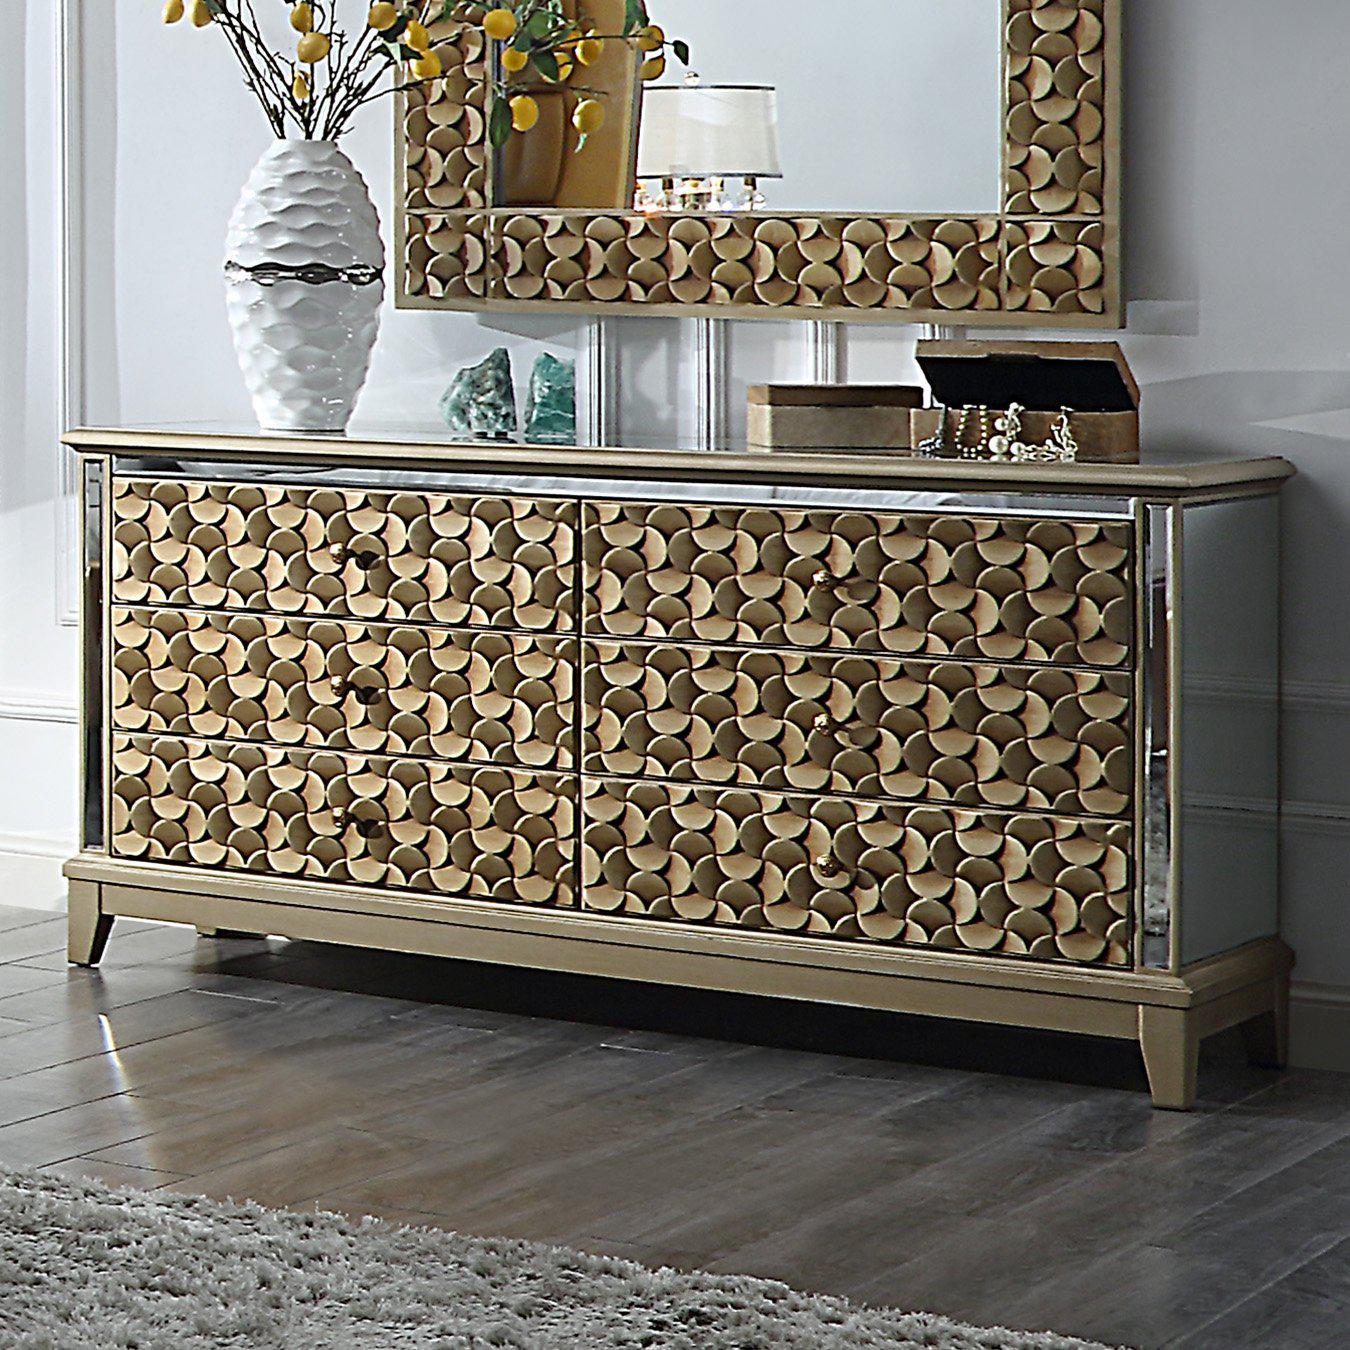 Homey Design Luxury Hd-6065 - Dresser-Iron Home Concepts